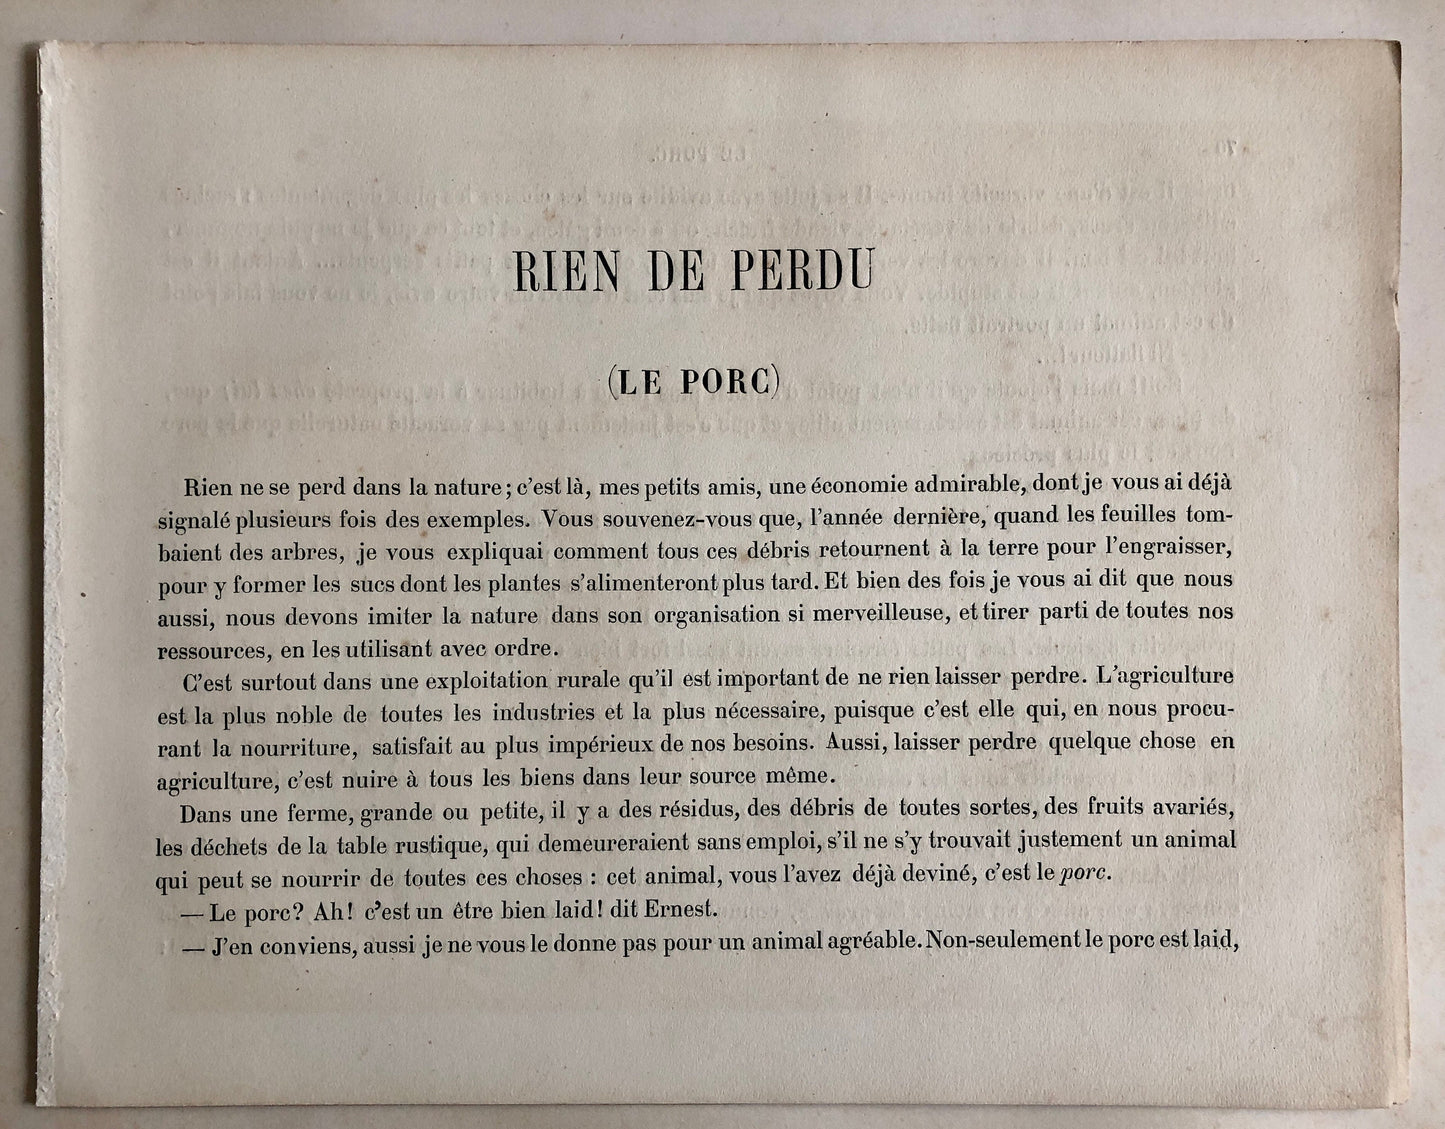 The Pig (Le Porc). A Large chromolithograph print from Les Animaux Domestiques by Mme Pape-Carpantier. Dated 1872. Size: 24.5 x 21.5 cms.